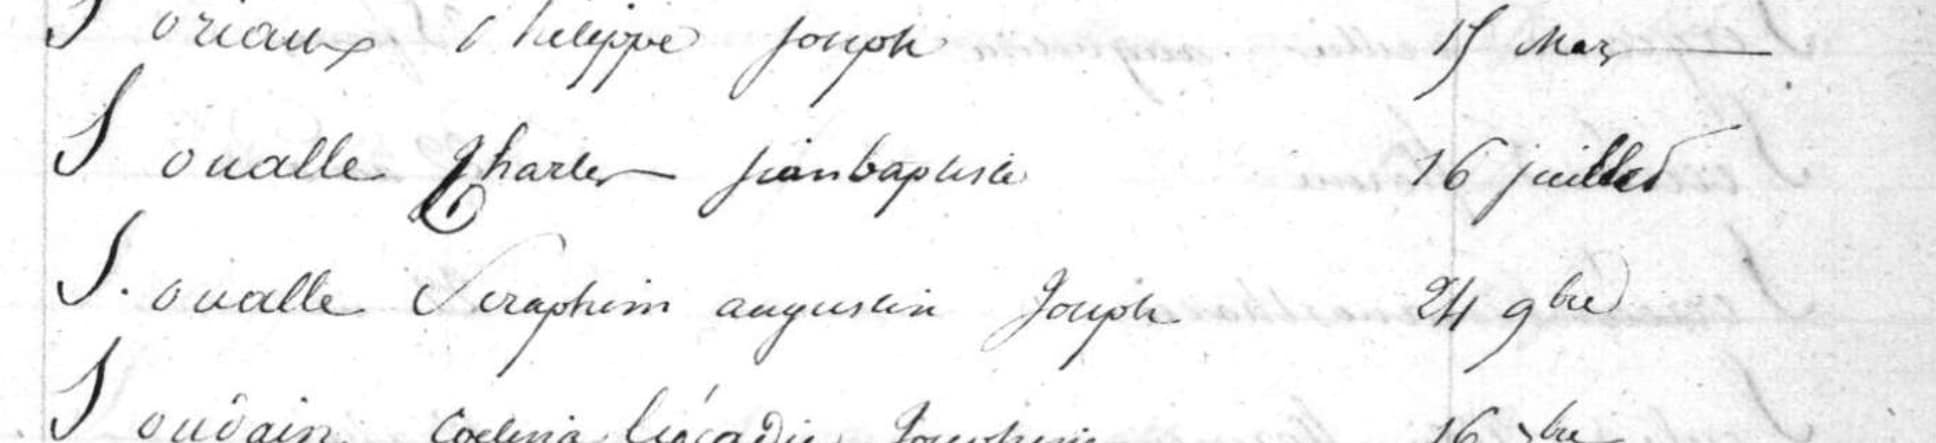 Soualle Charles Jeanbaptiste / 16 Juillet [1824]